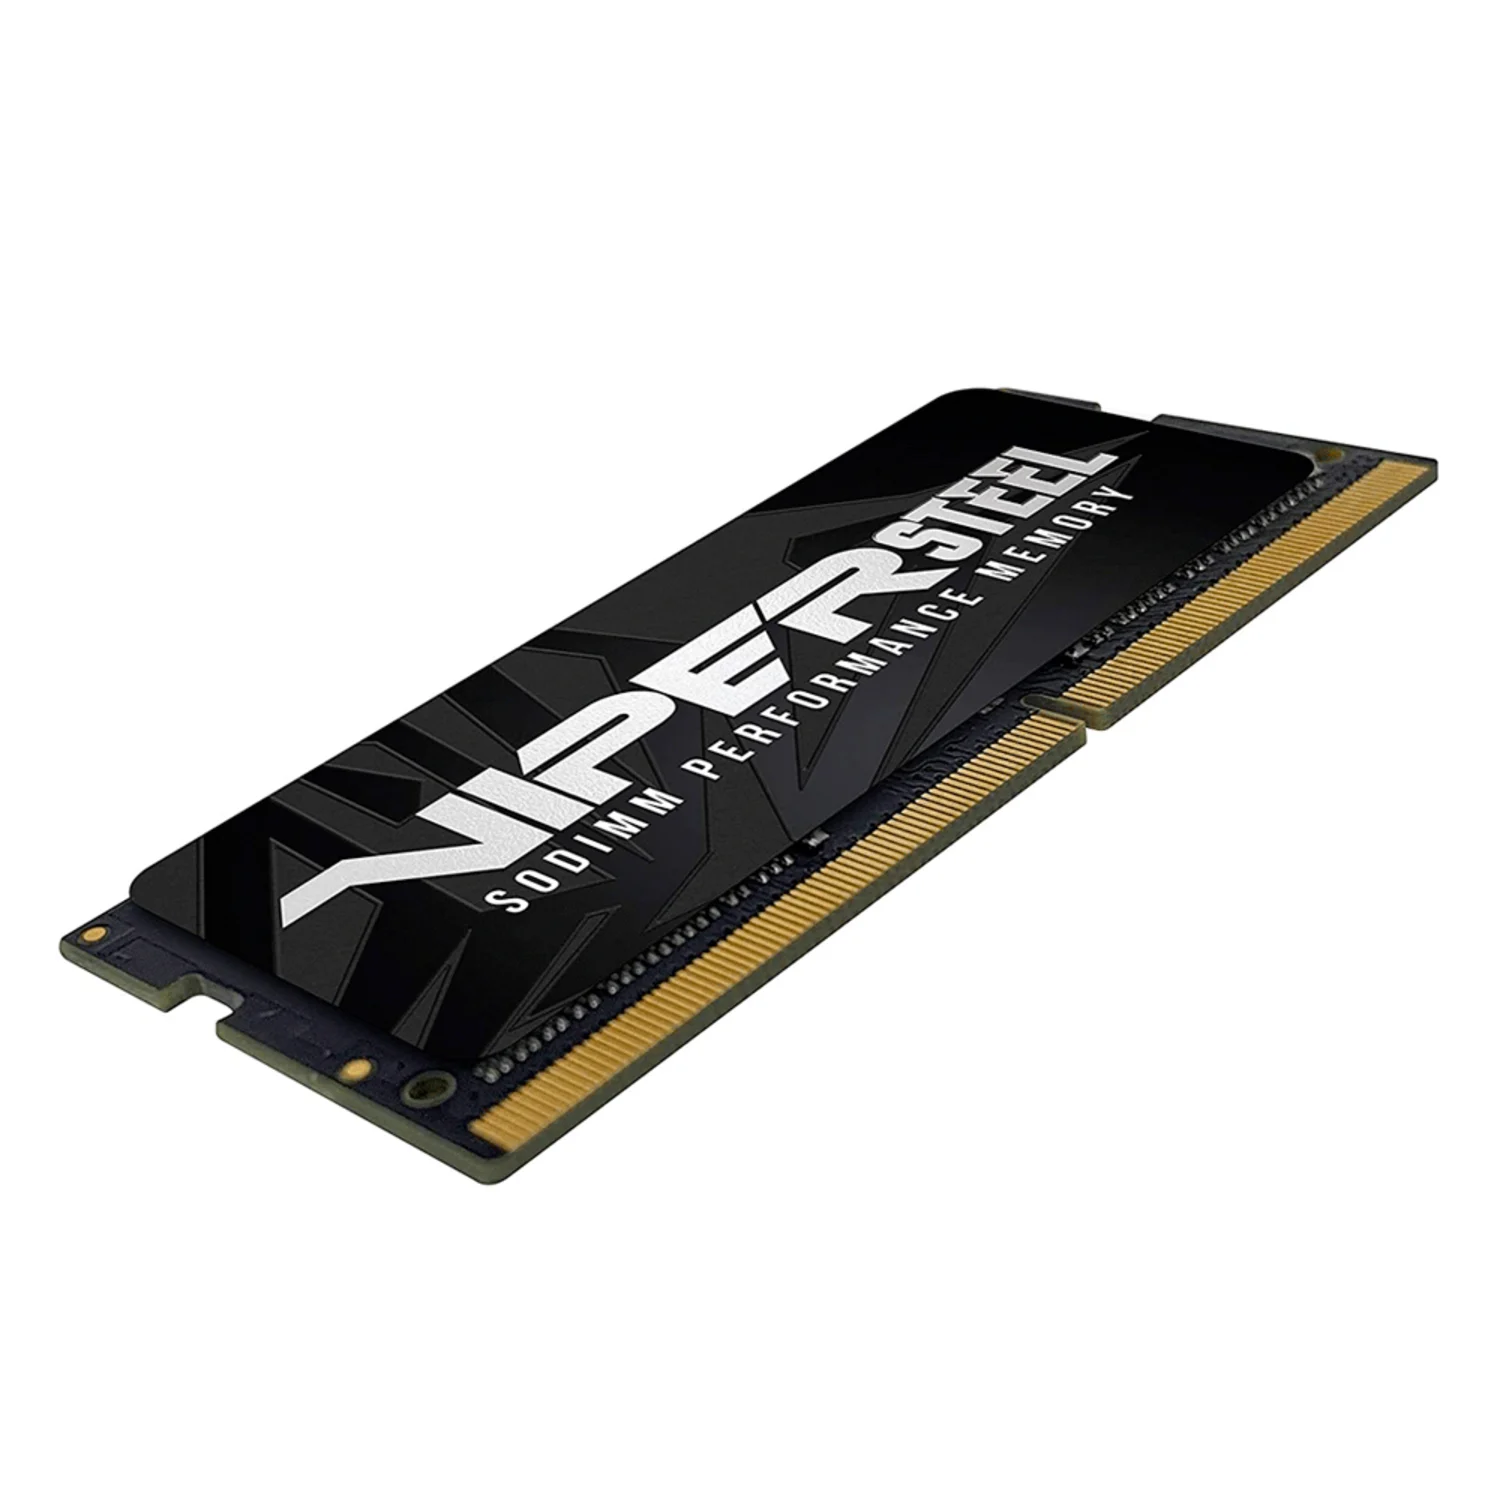 Memória RAM para Notebook Patriot Viper Steel 32GB / DDR4 / 2666mhz / 1x32GB - (PVS432G266C8S)